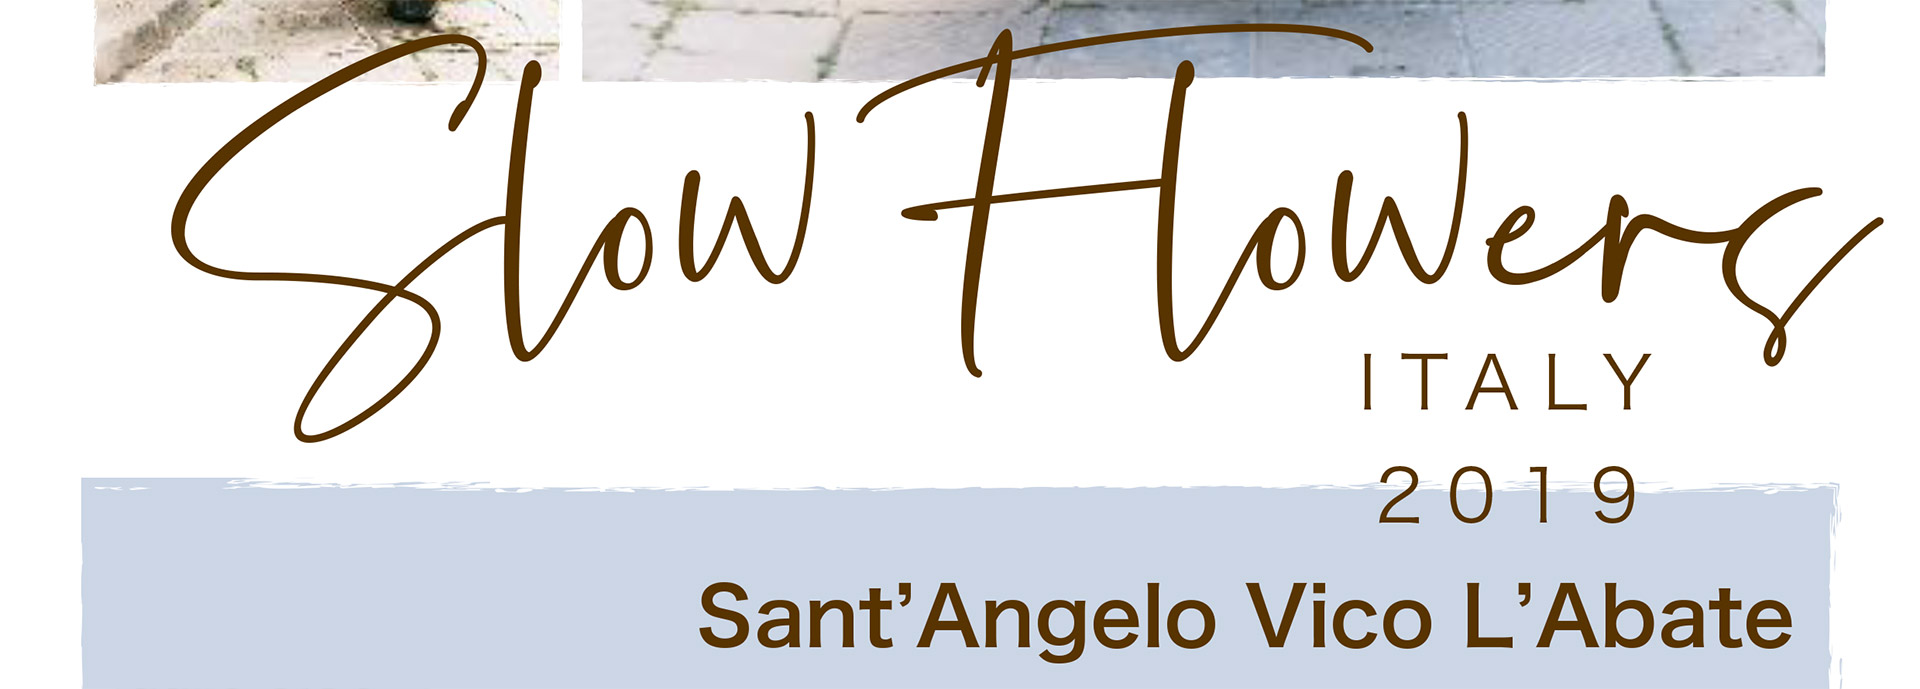 SlowFlowers Italy 2019 a Sant’Angelo